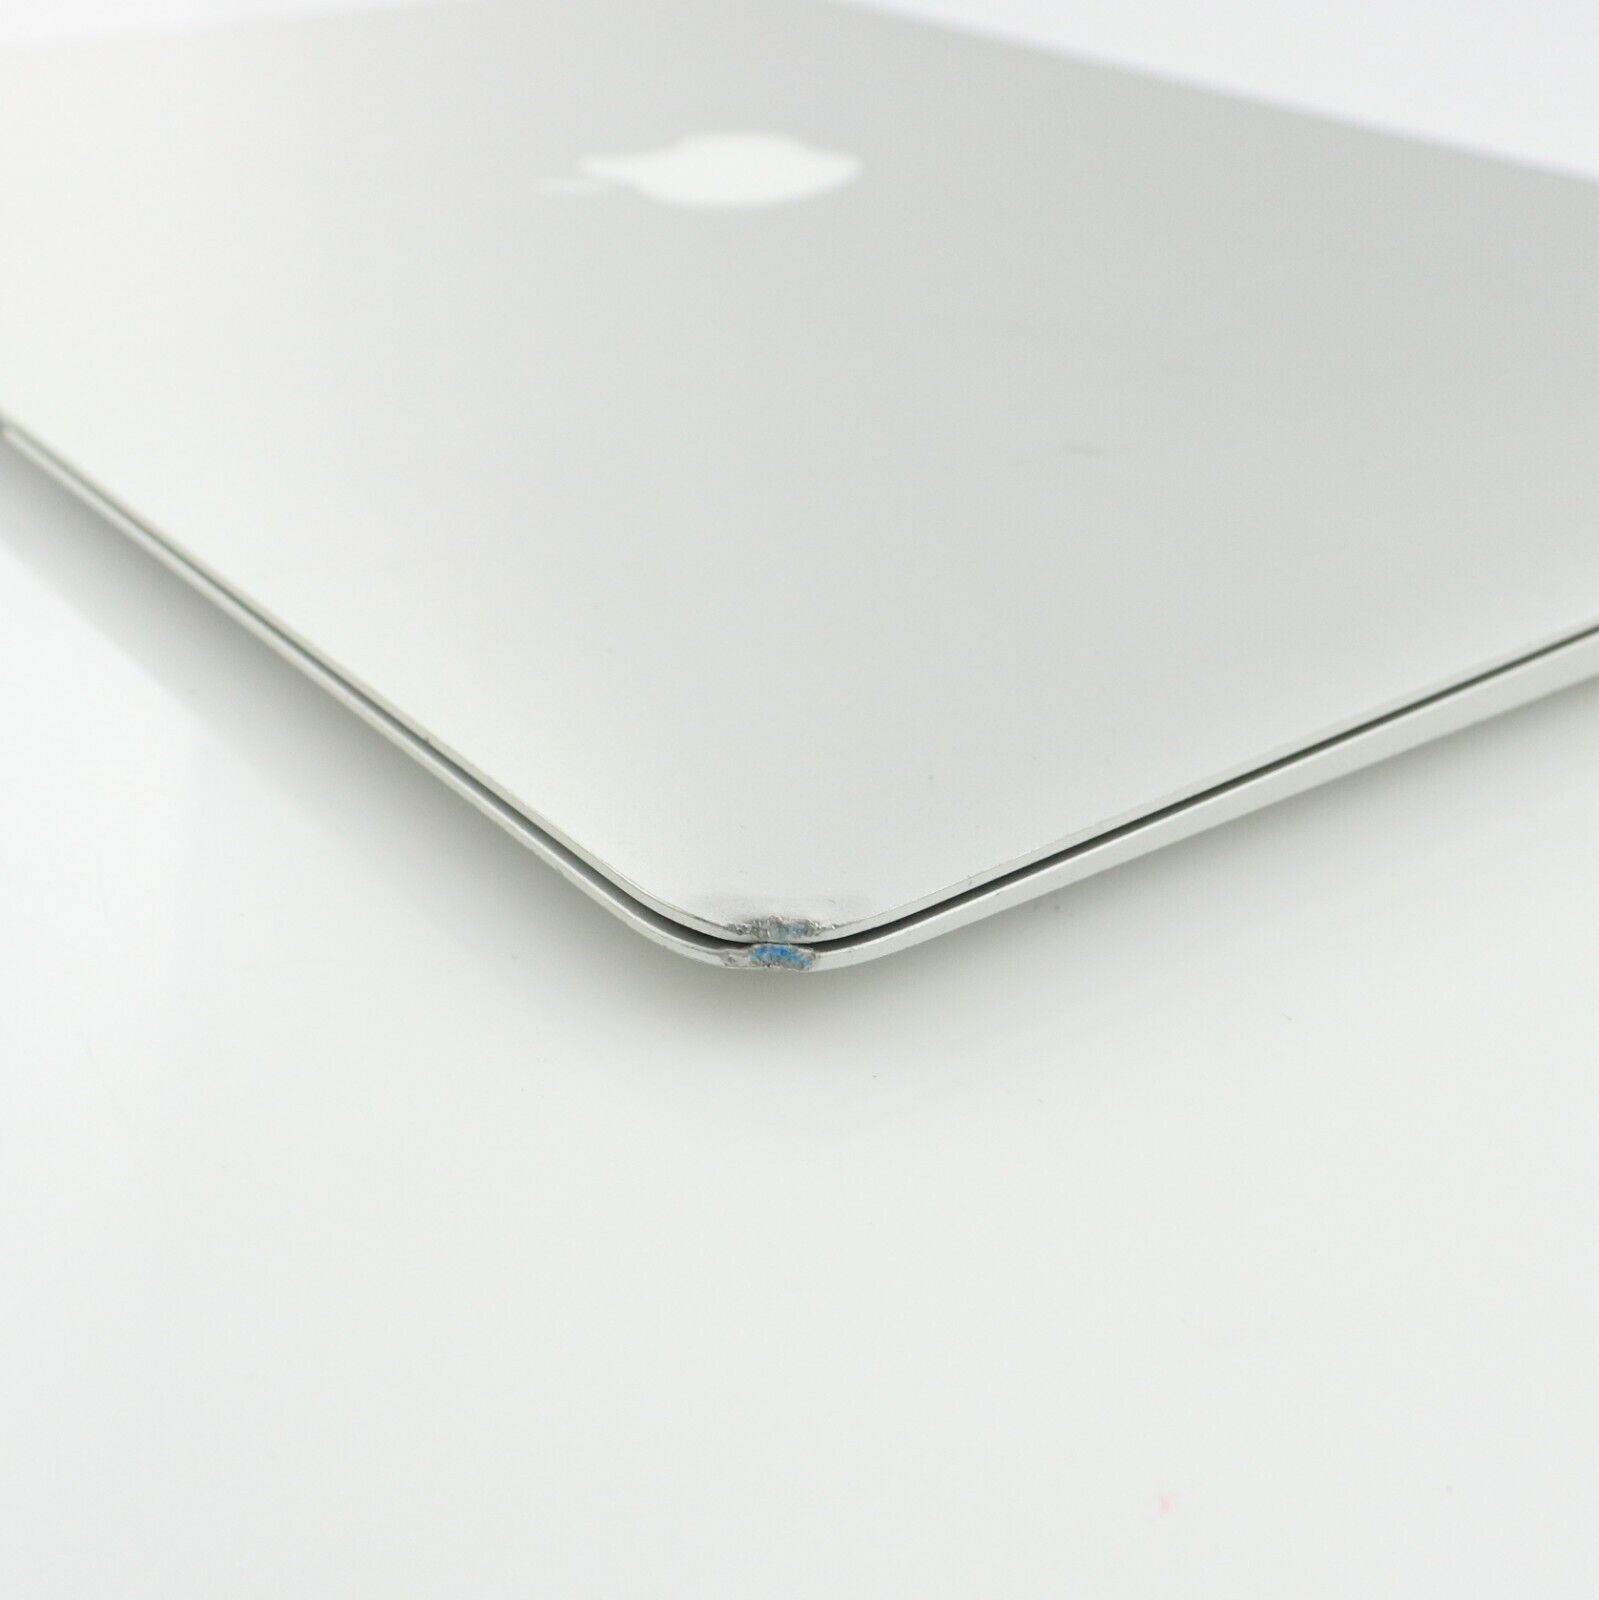 MacBook Air with dented corner